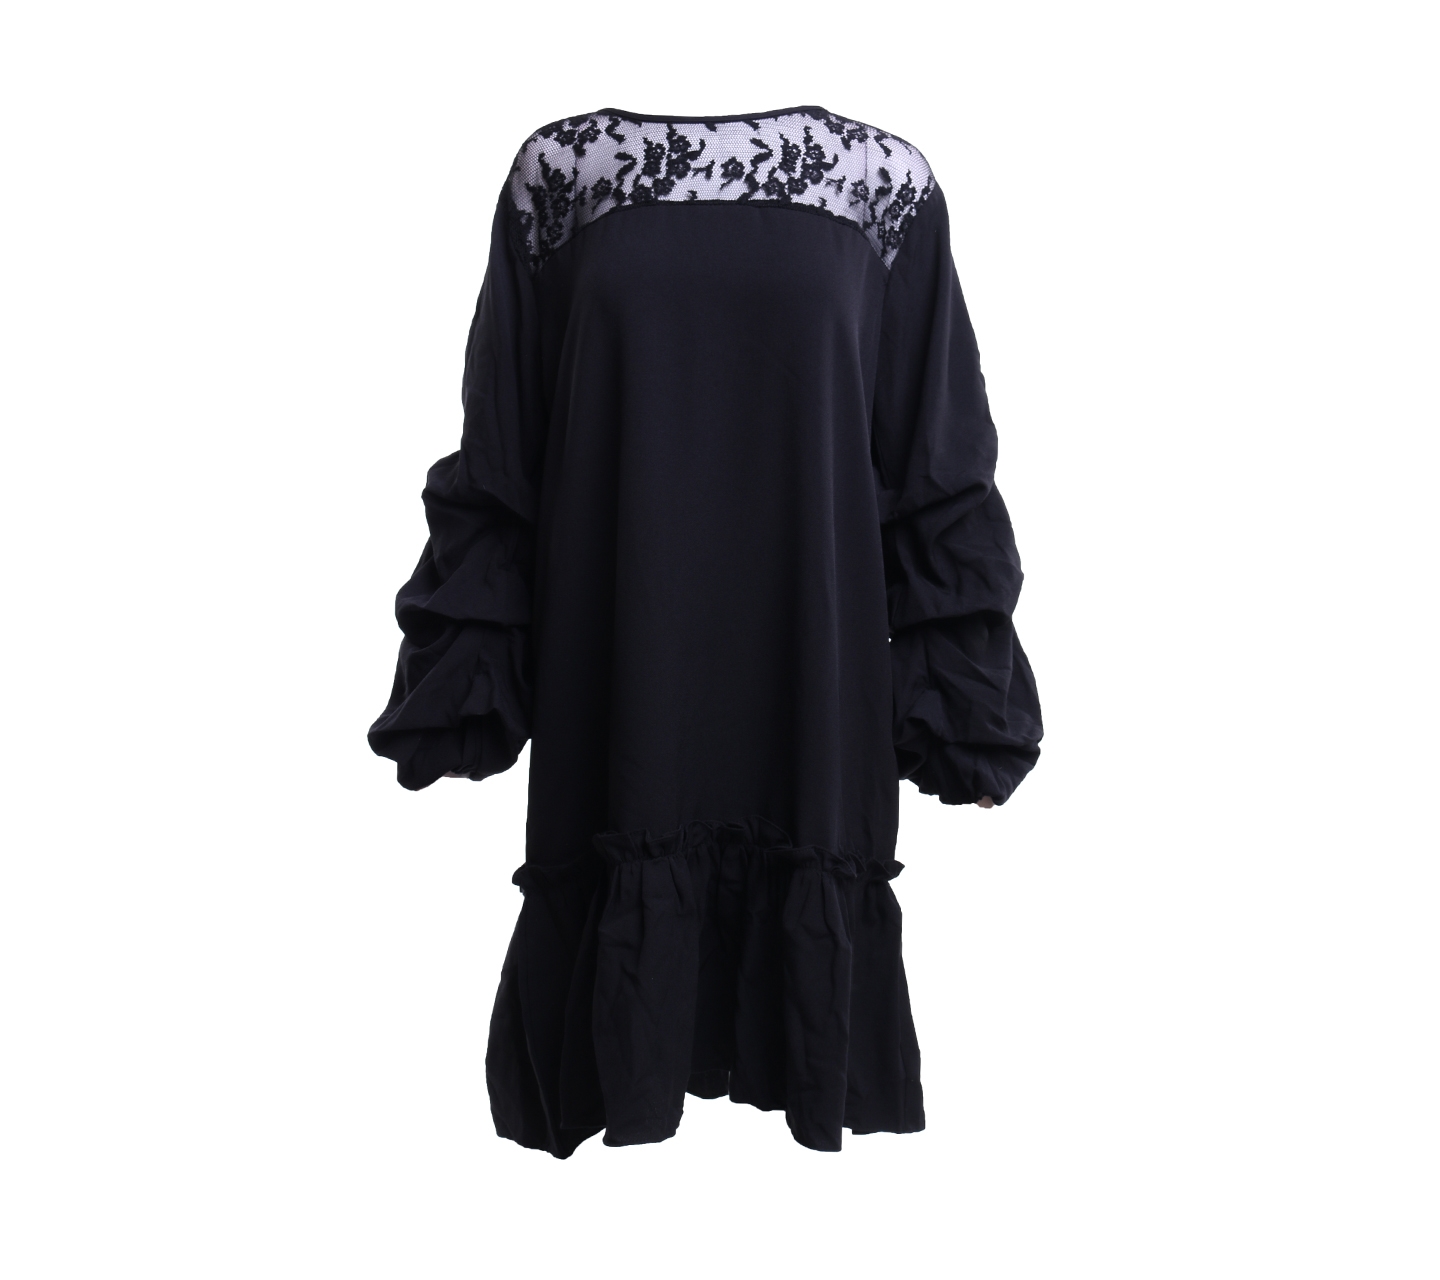 Marie & Frisco Black Lace Mini Dress